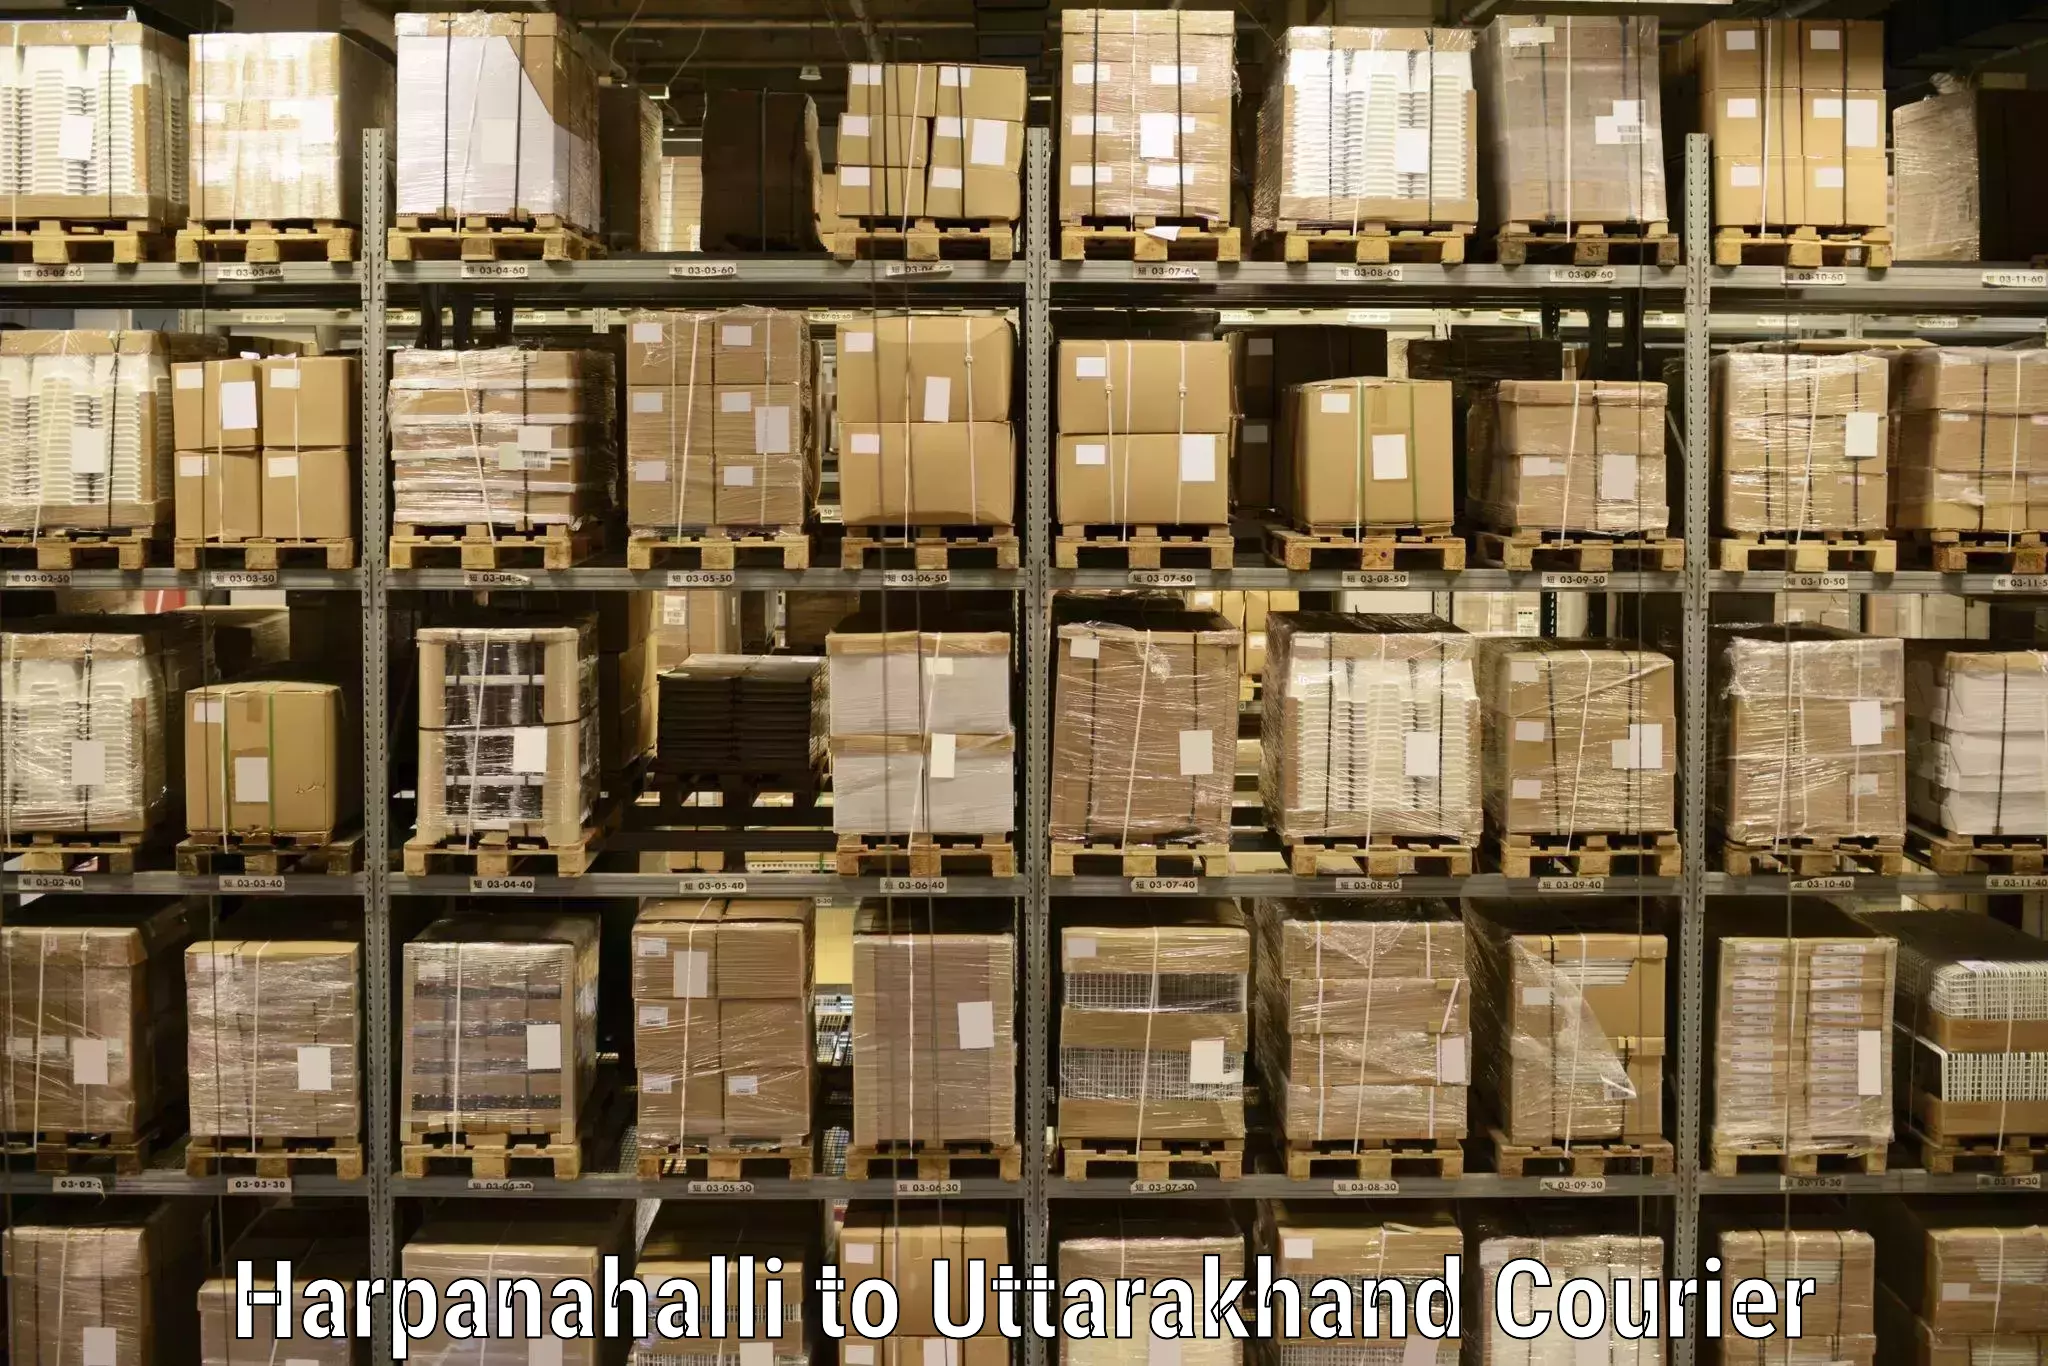 Advanced shipping technology Harpanahalli to Uttarakhand